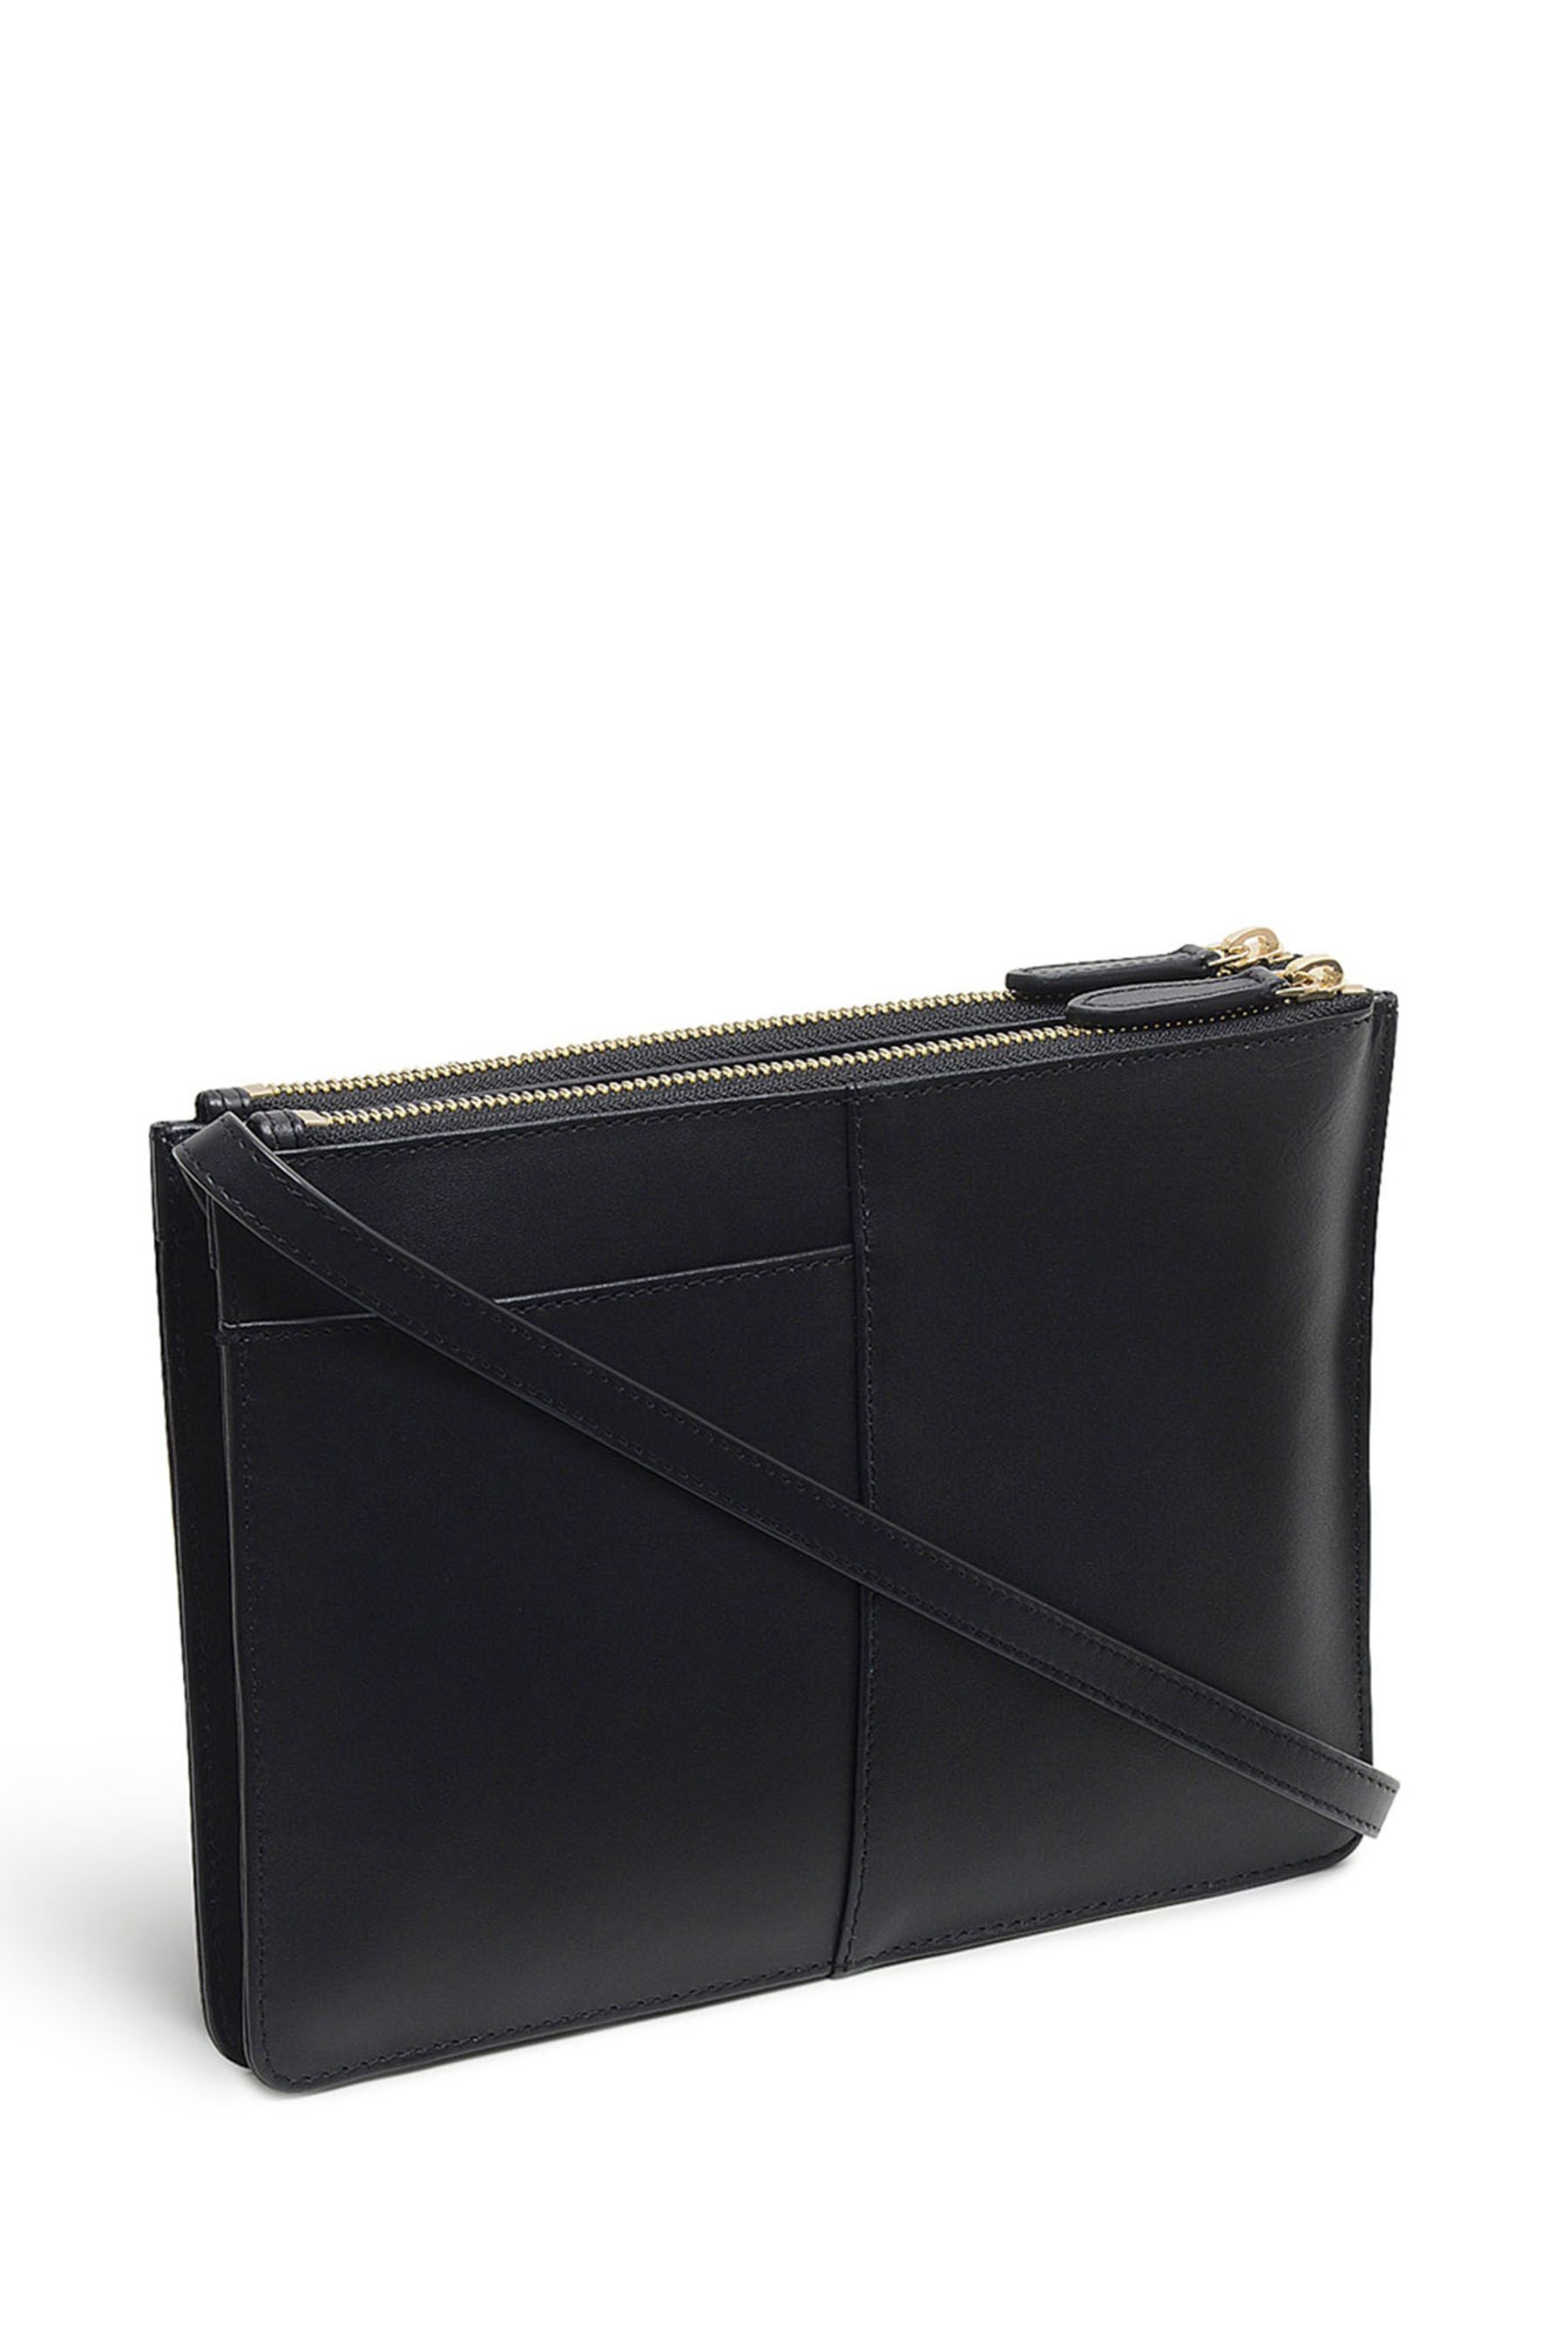 Buy Radley London Black Pockets Medium Multi Compartment Cross-Body Bag ...